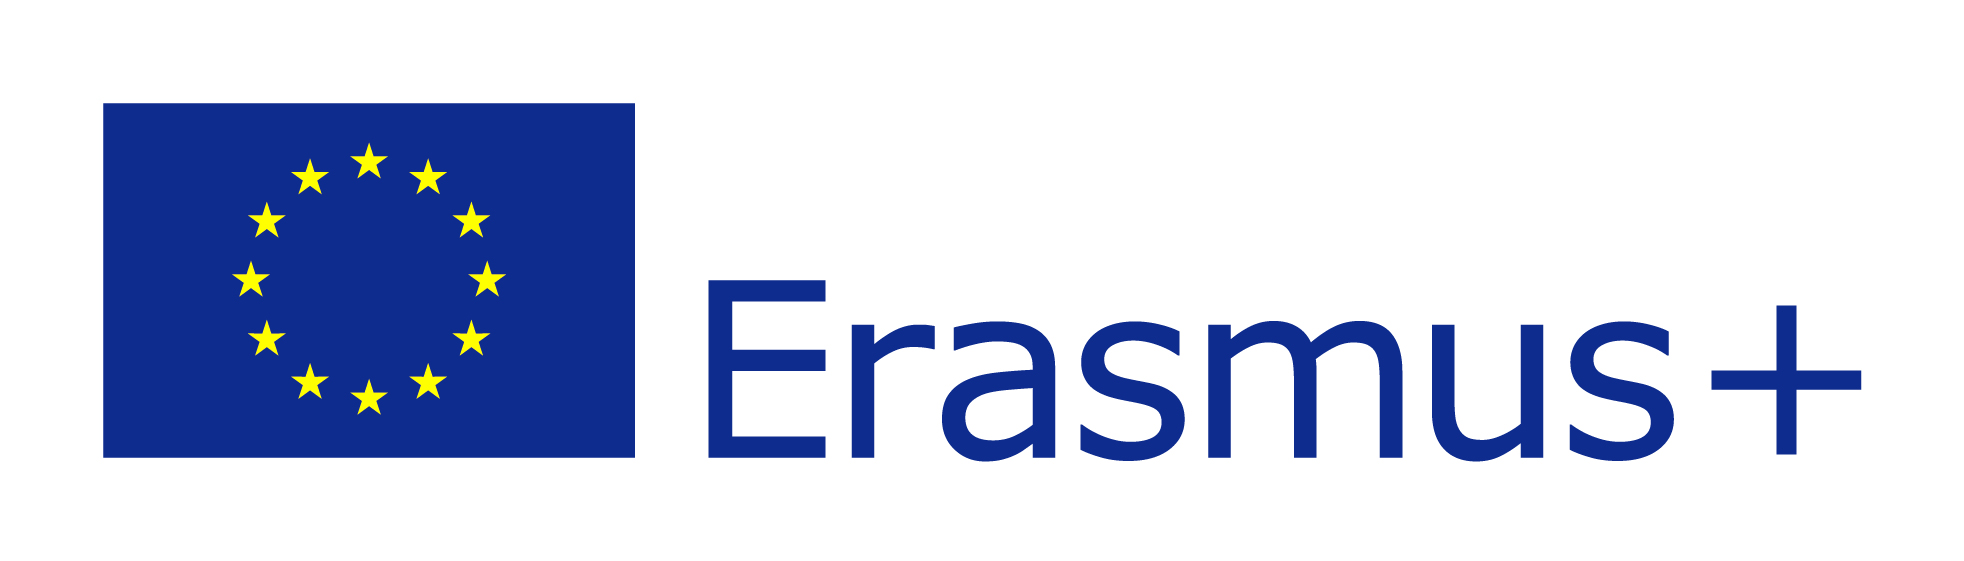 logo-erasmus+